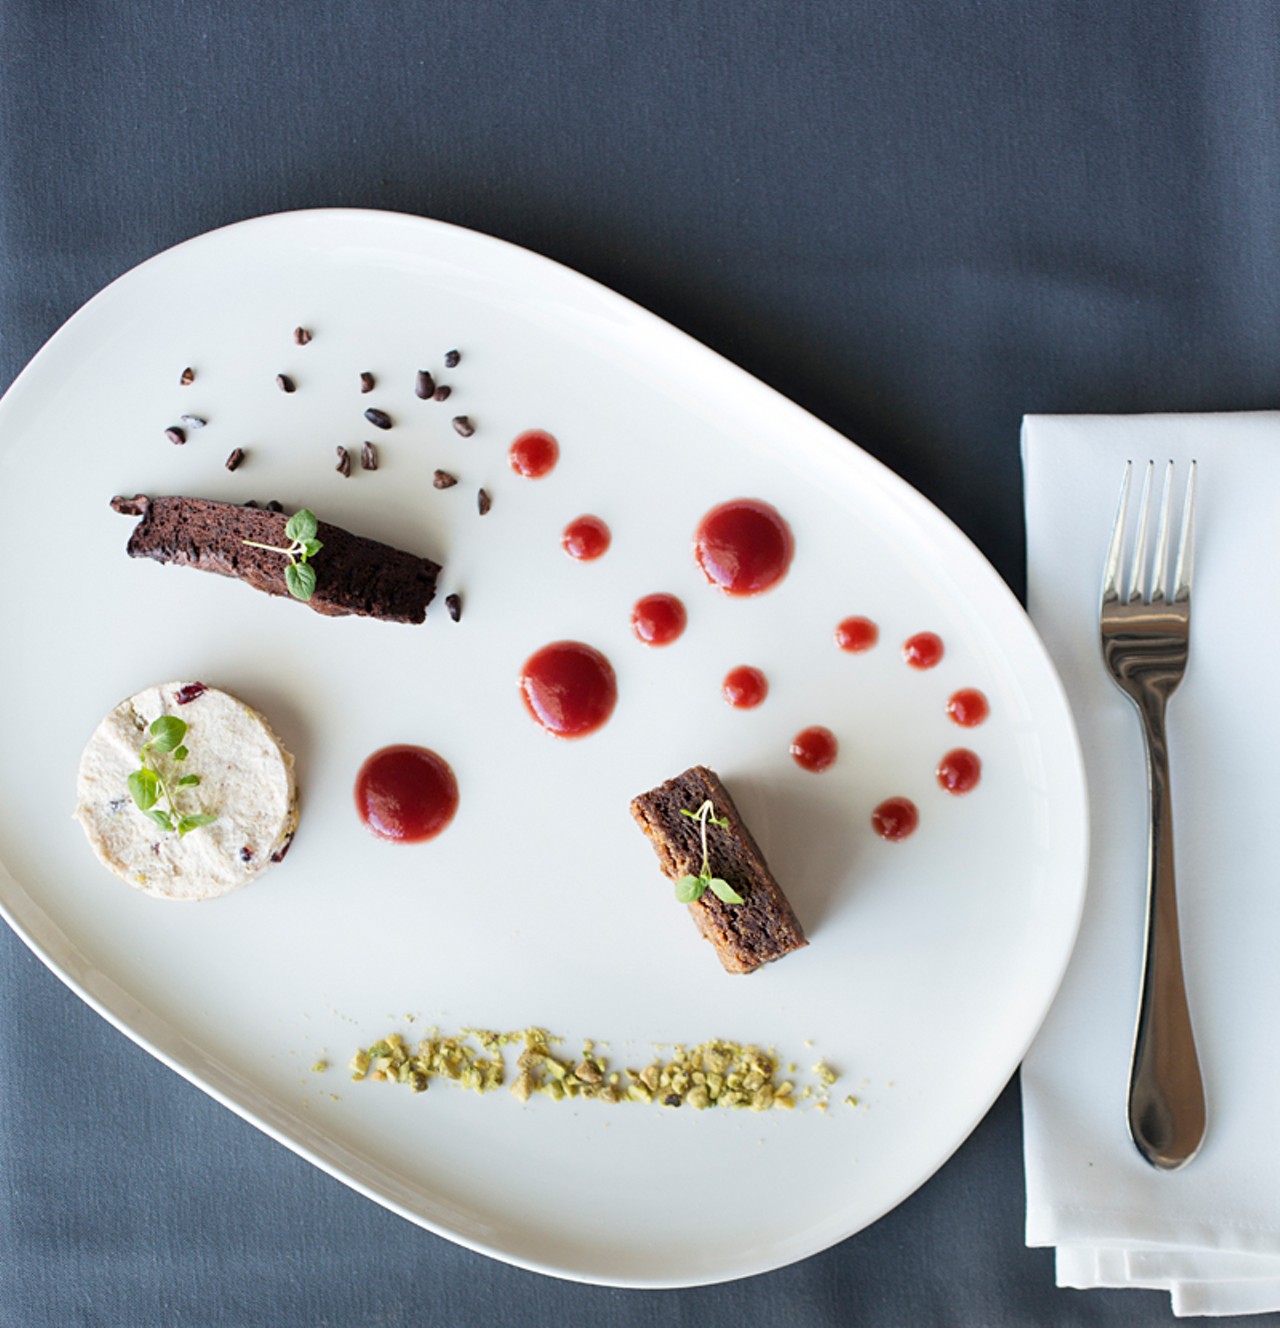 "Chocolate, Fruit, Frozen" is chocolate sponge and persimmon cake with persimmon-cranberry-pistachio semifreddo.